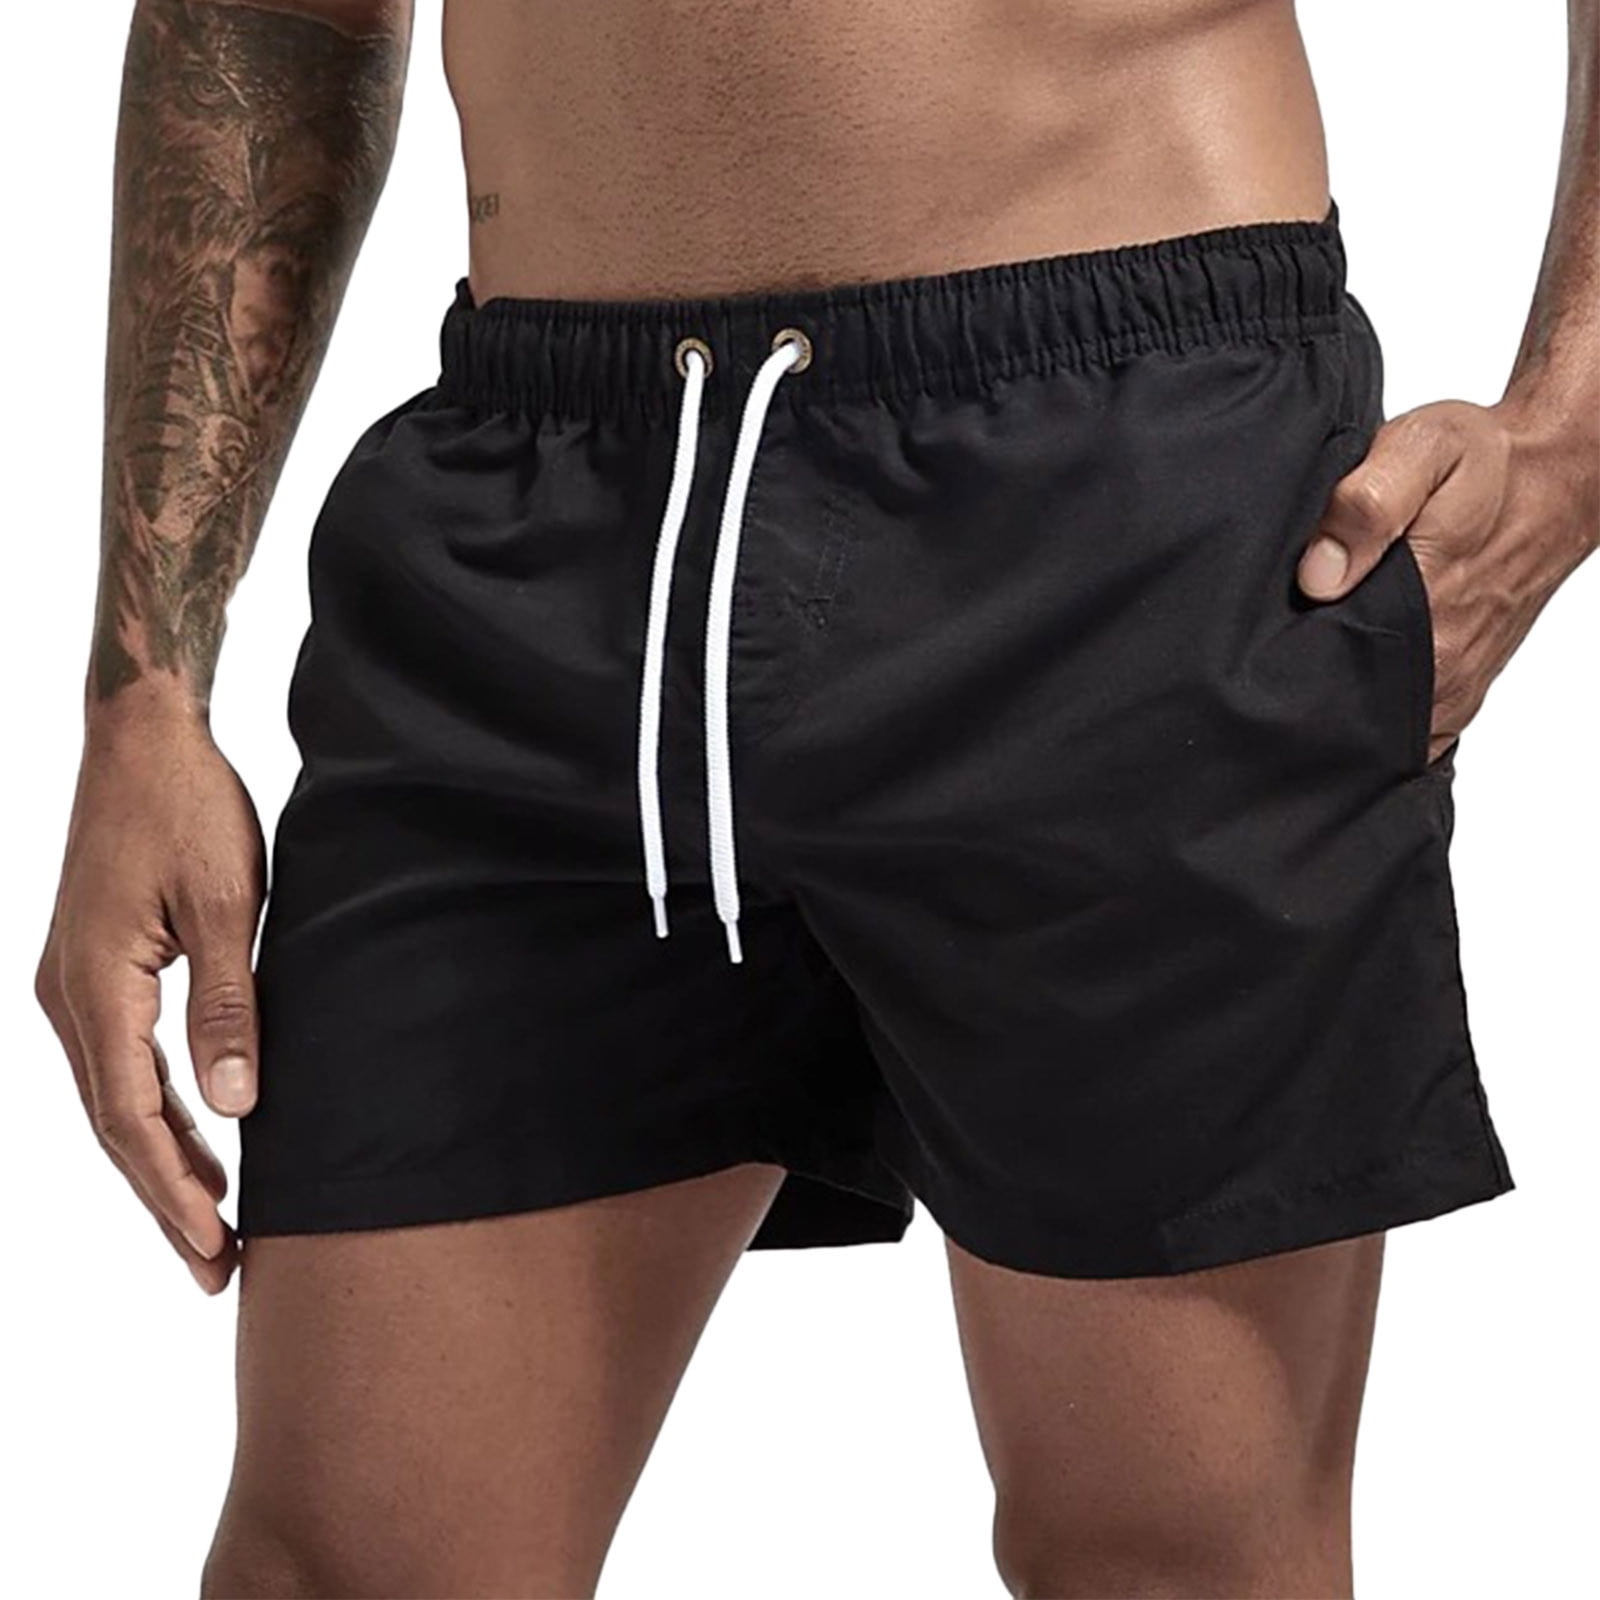 adviicd Black Shorts Men's Slim-Fit 5